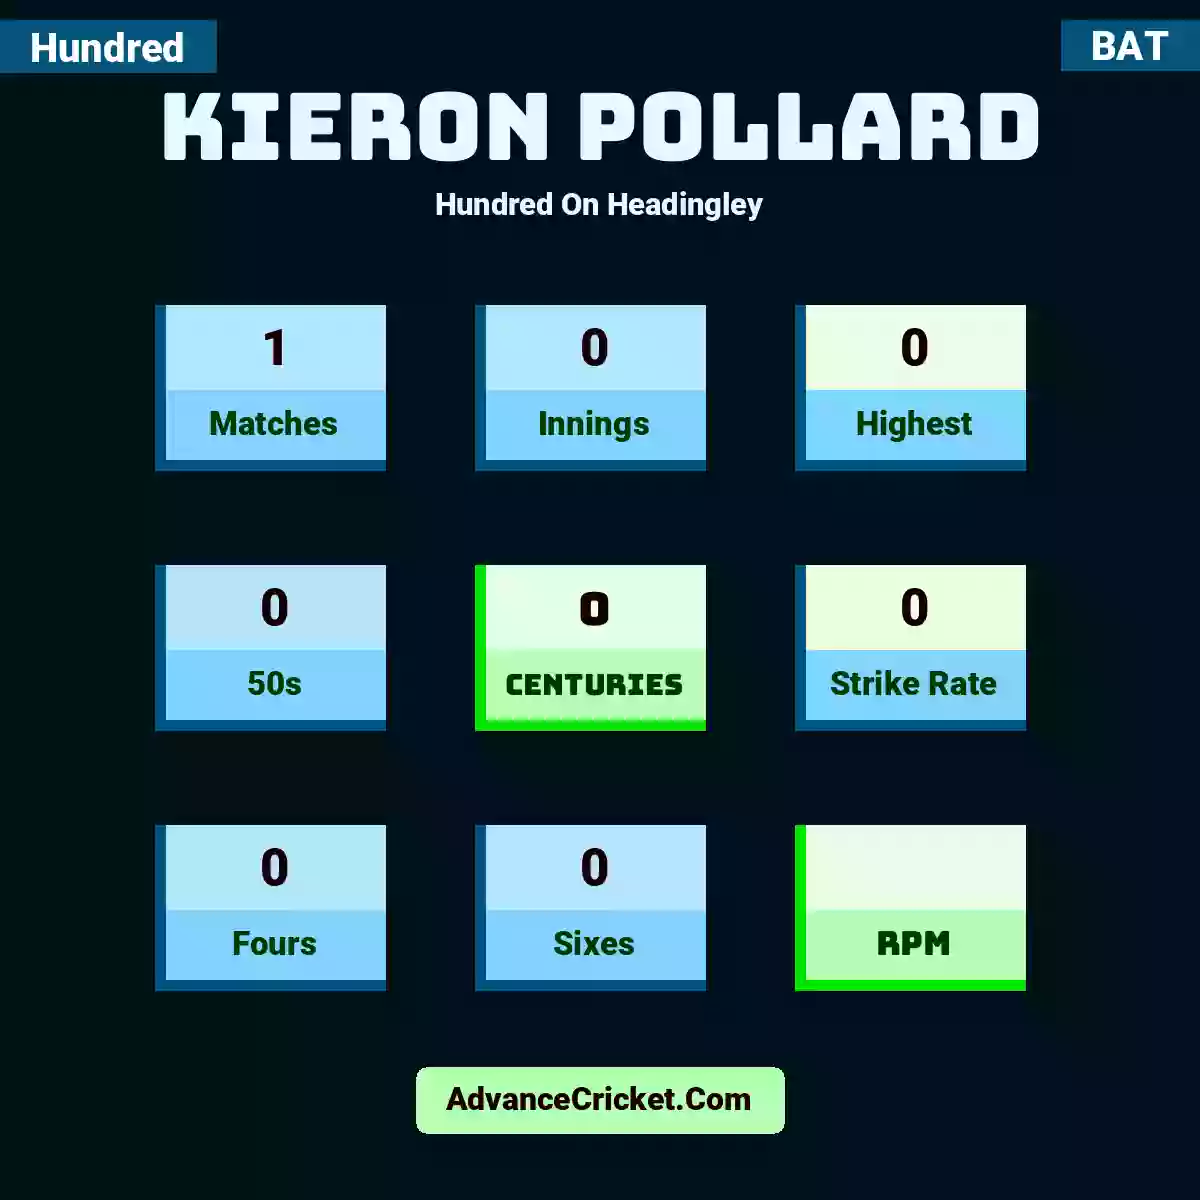 Kieron Pollard Hundred  On Headingley, Kieron Pollard played 1 matches, scored 0 runs as highest, 0 half-centuries, and 0 centuries, with a strike rate of 0. K.Pollard hit 0 fours and 0 sixes.